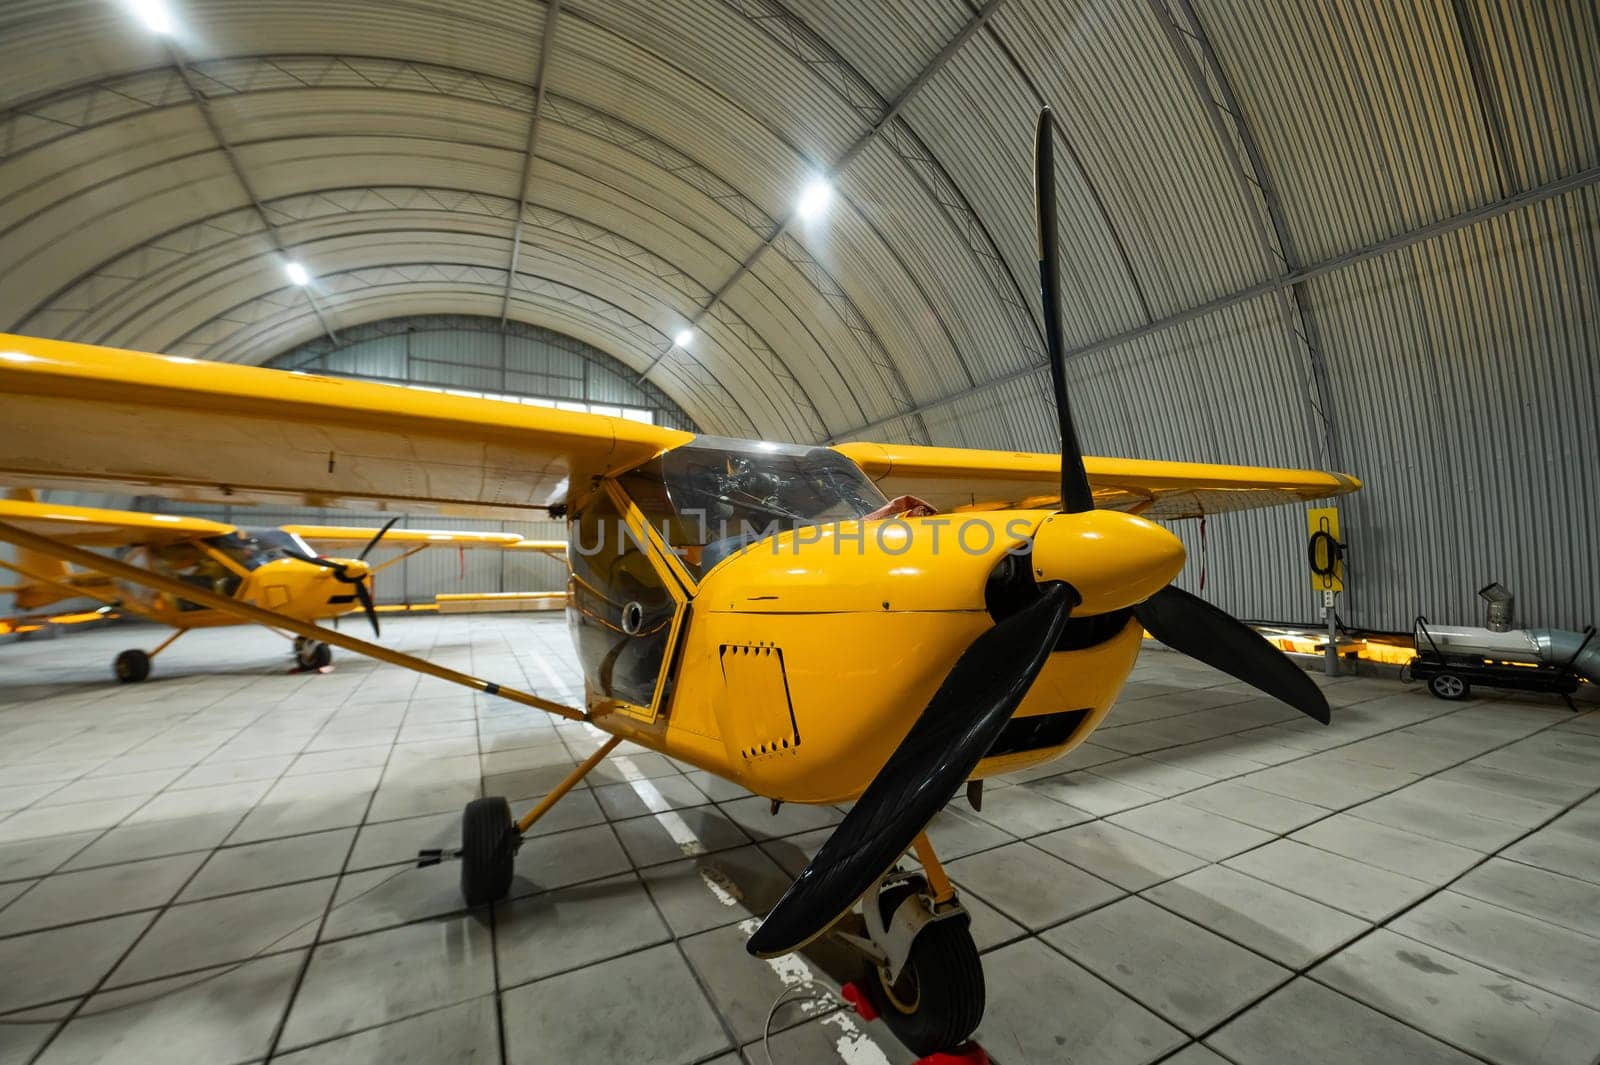 Yellow airplane glider in the hangar